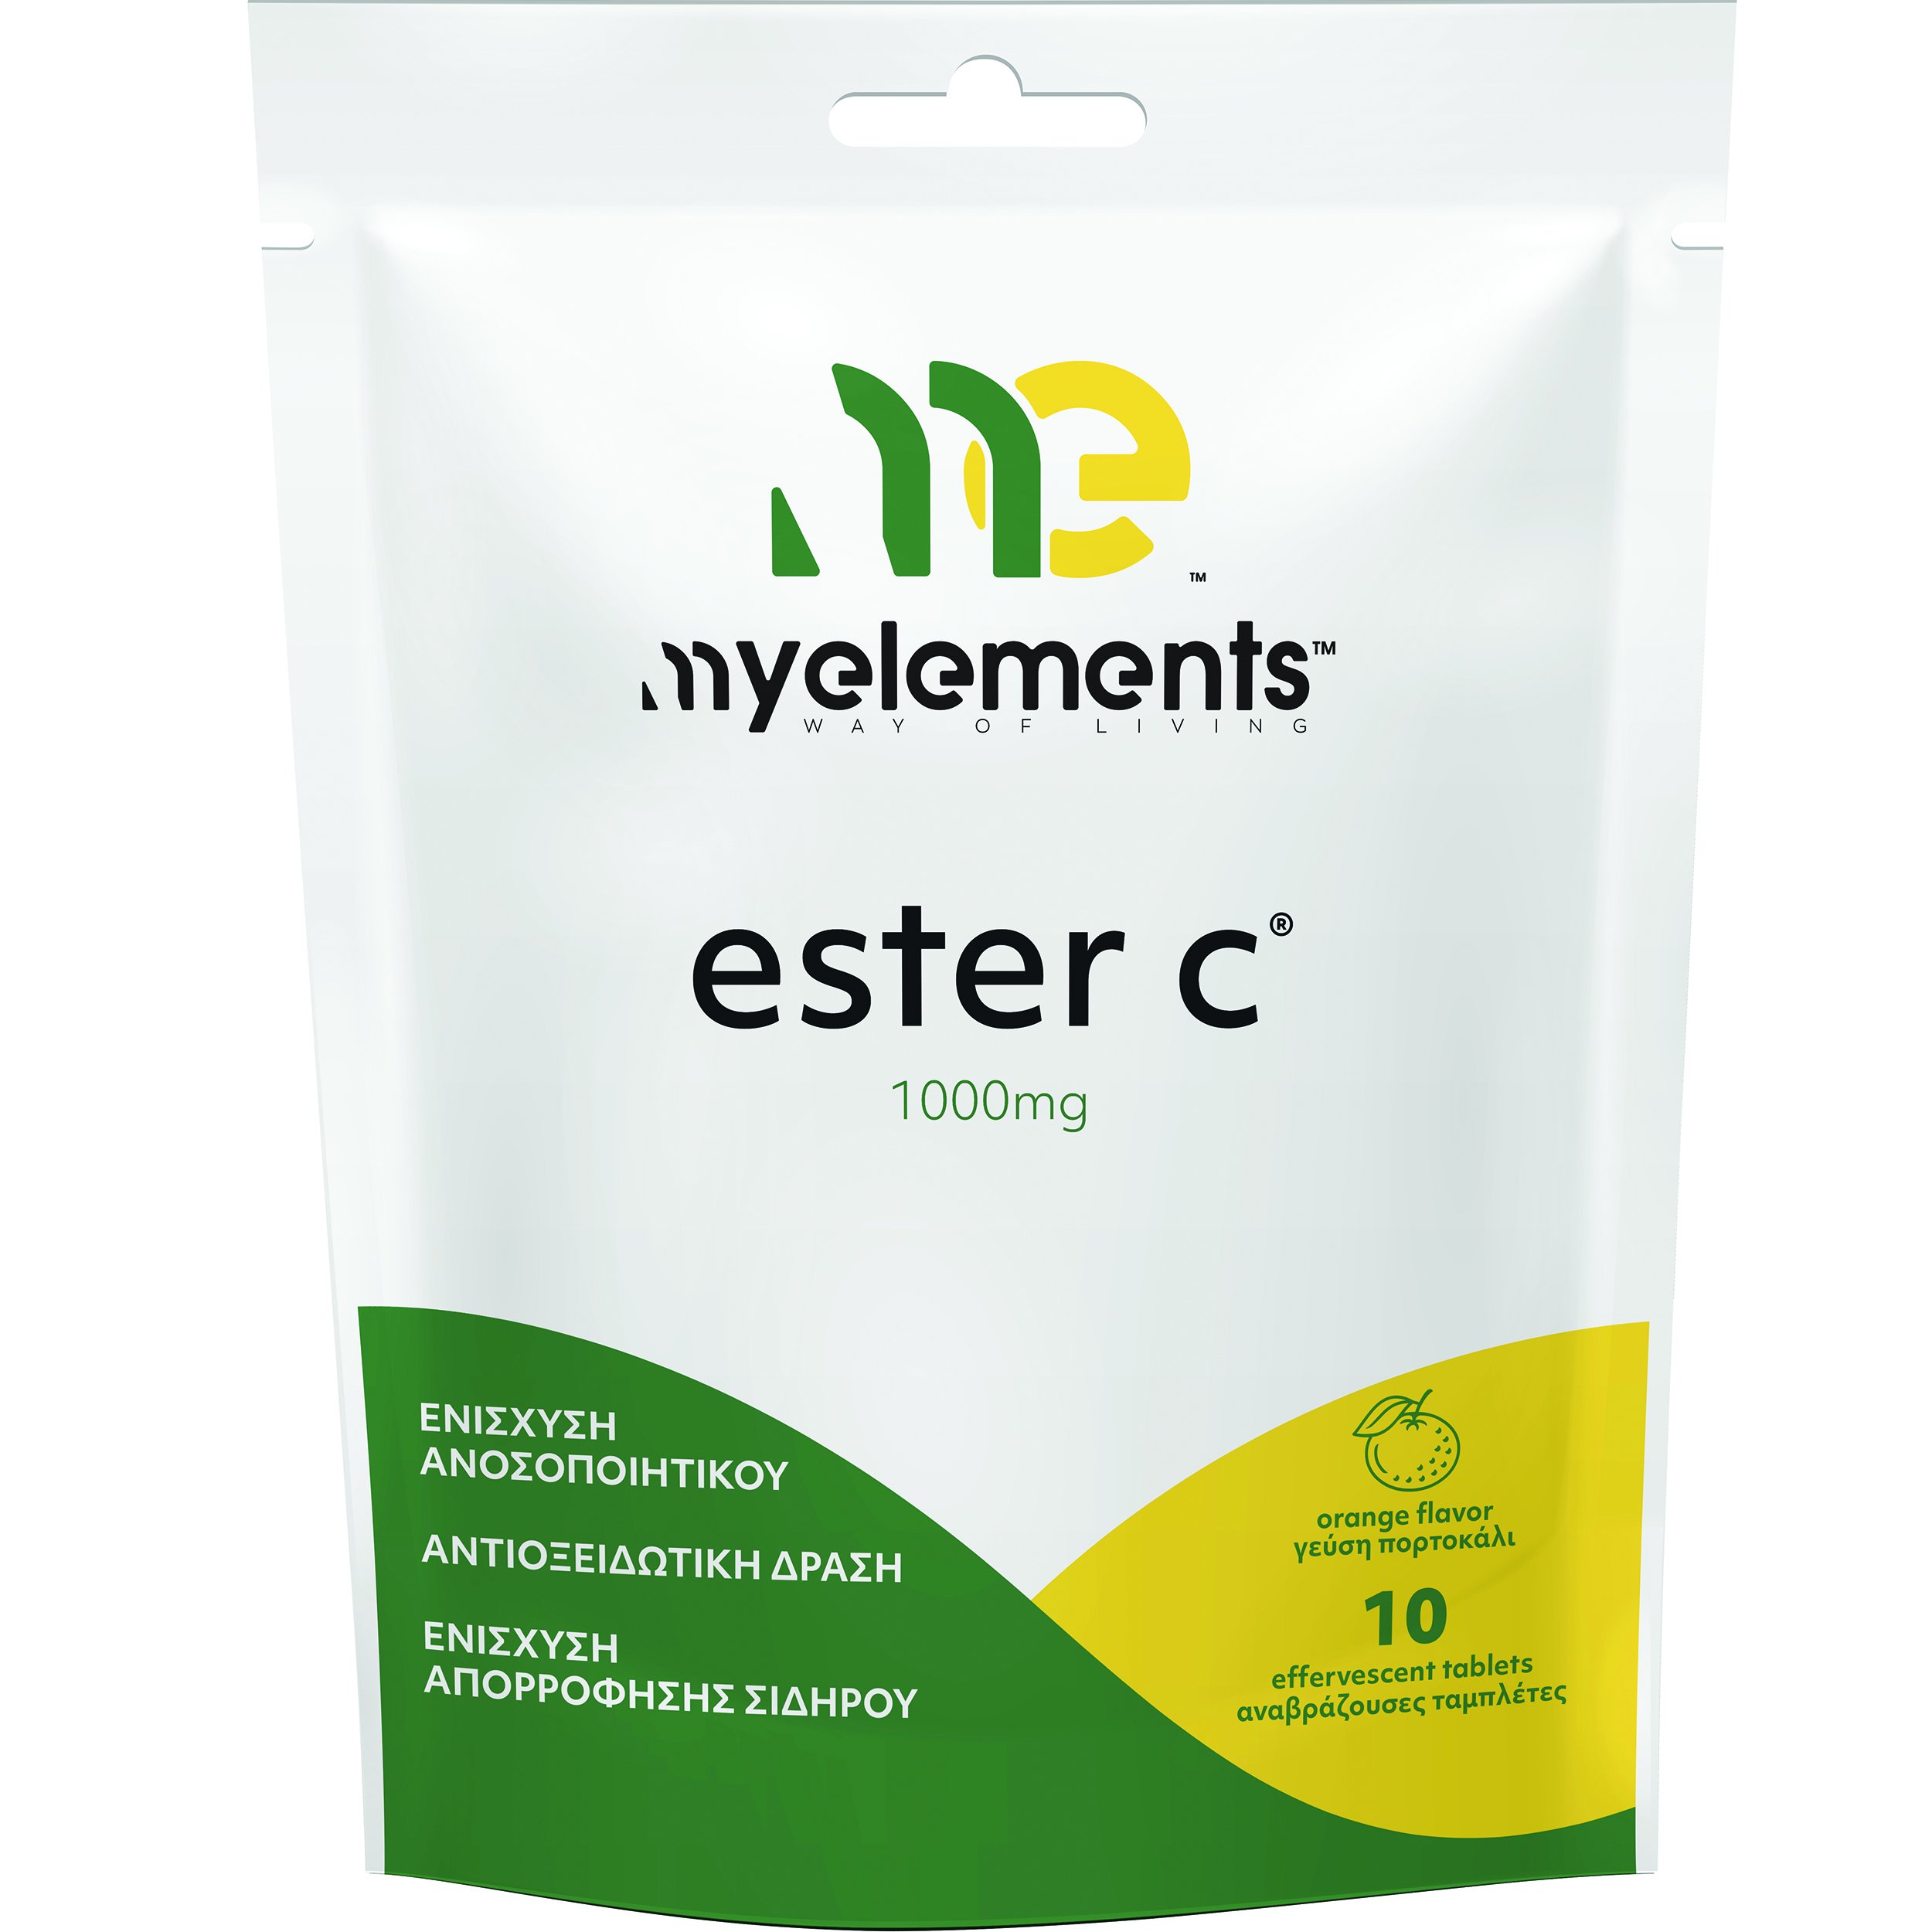 My Elements Ester C 1000mg Συμπλήρωμα Διατροφής Βιταμίνης C Υψηλής Απορροφησιμότητας Ήπια στο Στομάχι για Ενίσχυση του Ανοσοποιητικού με Αντιοξειδωτική Δράση με Γεύση Πορτοκάλι 10 Effer.tabs 58072